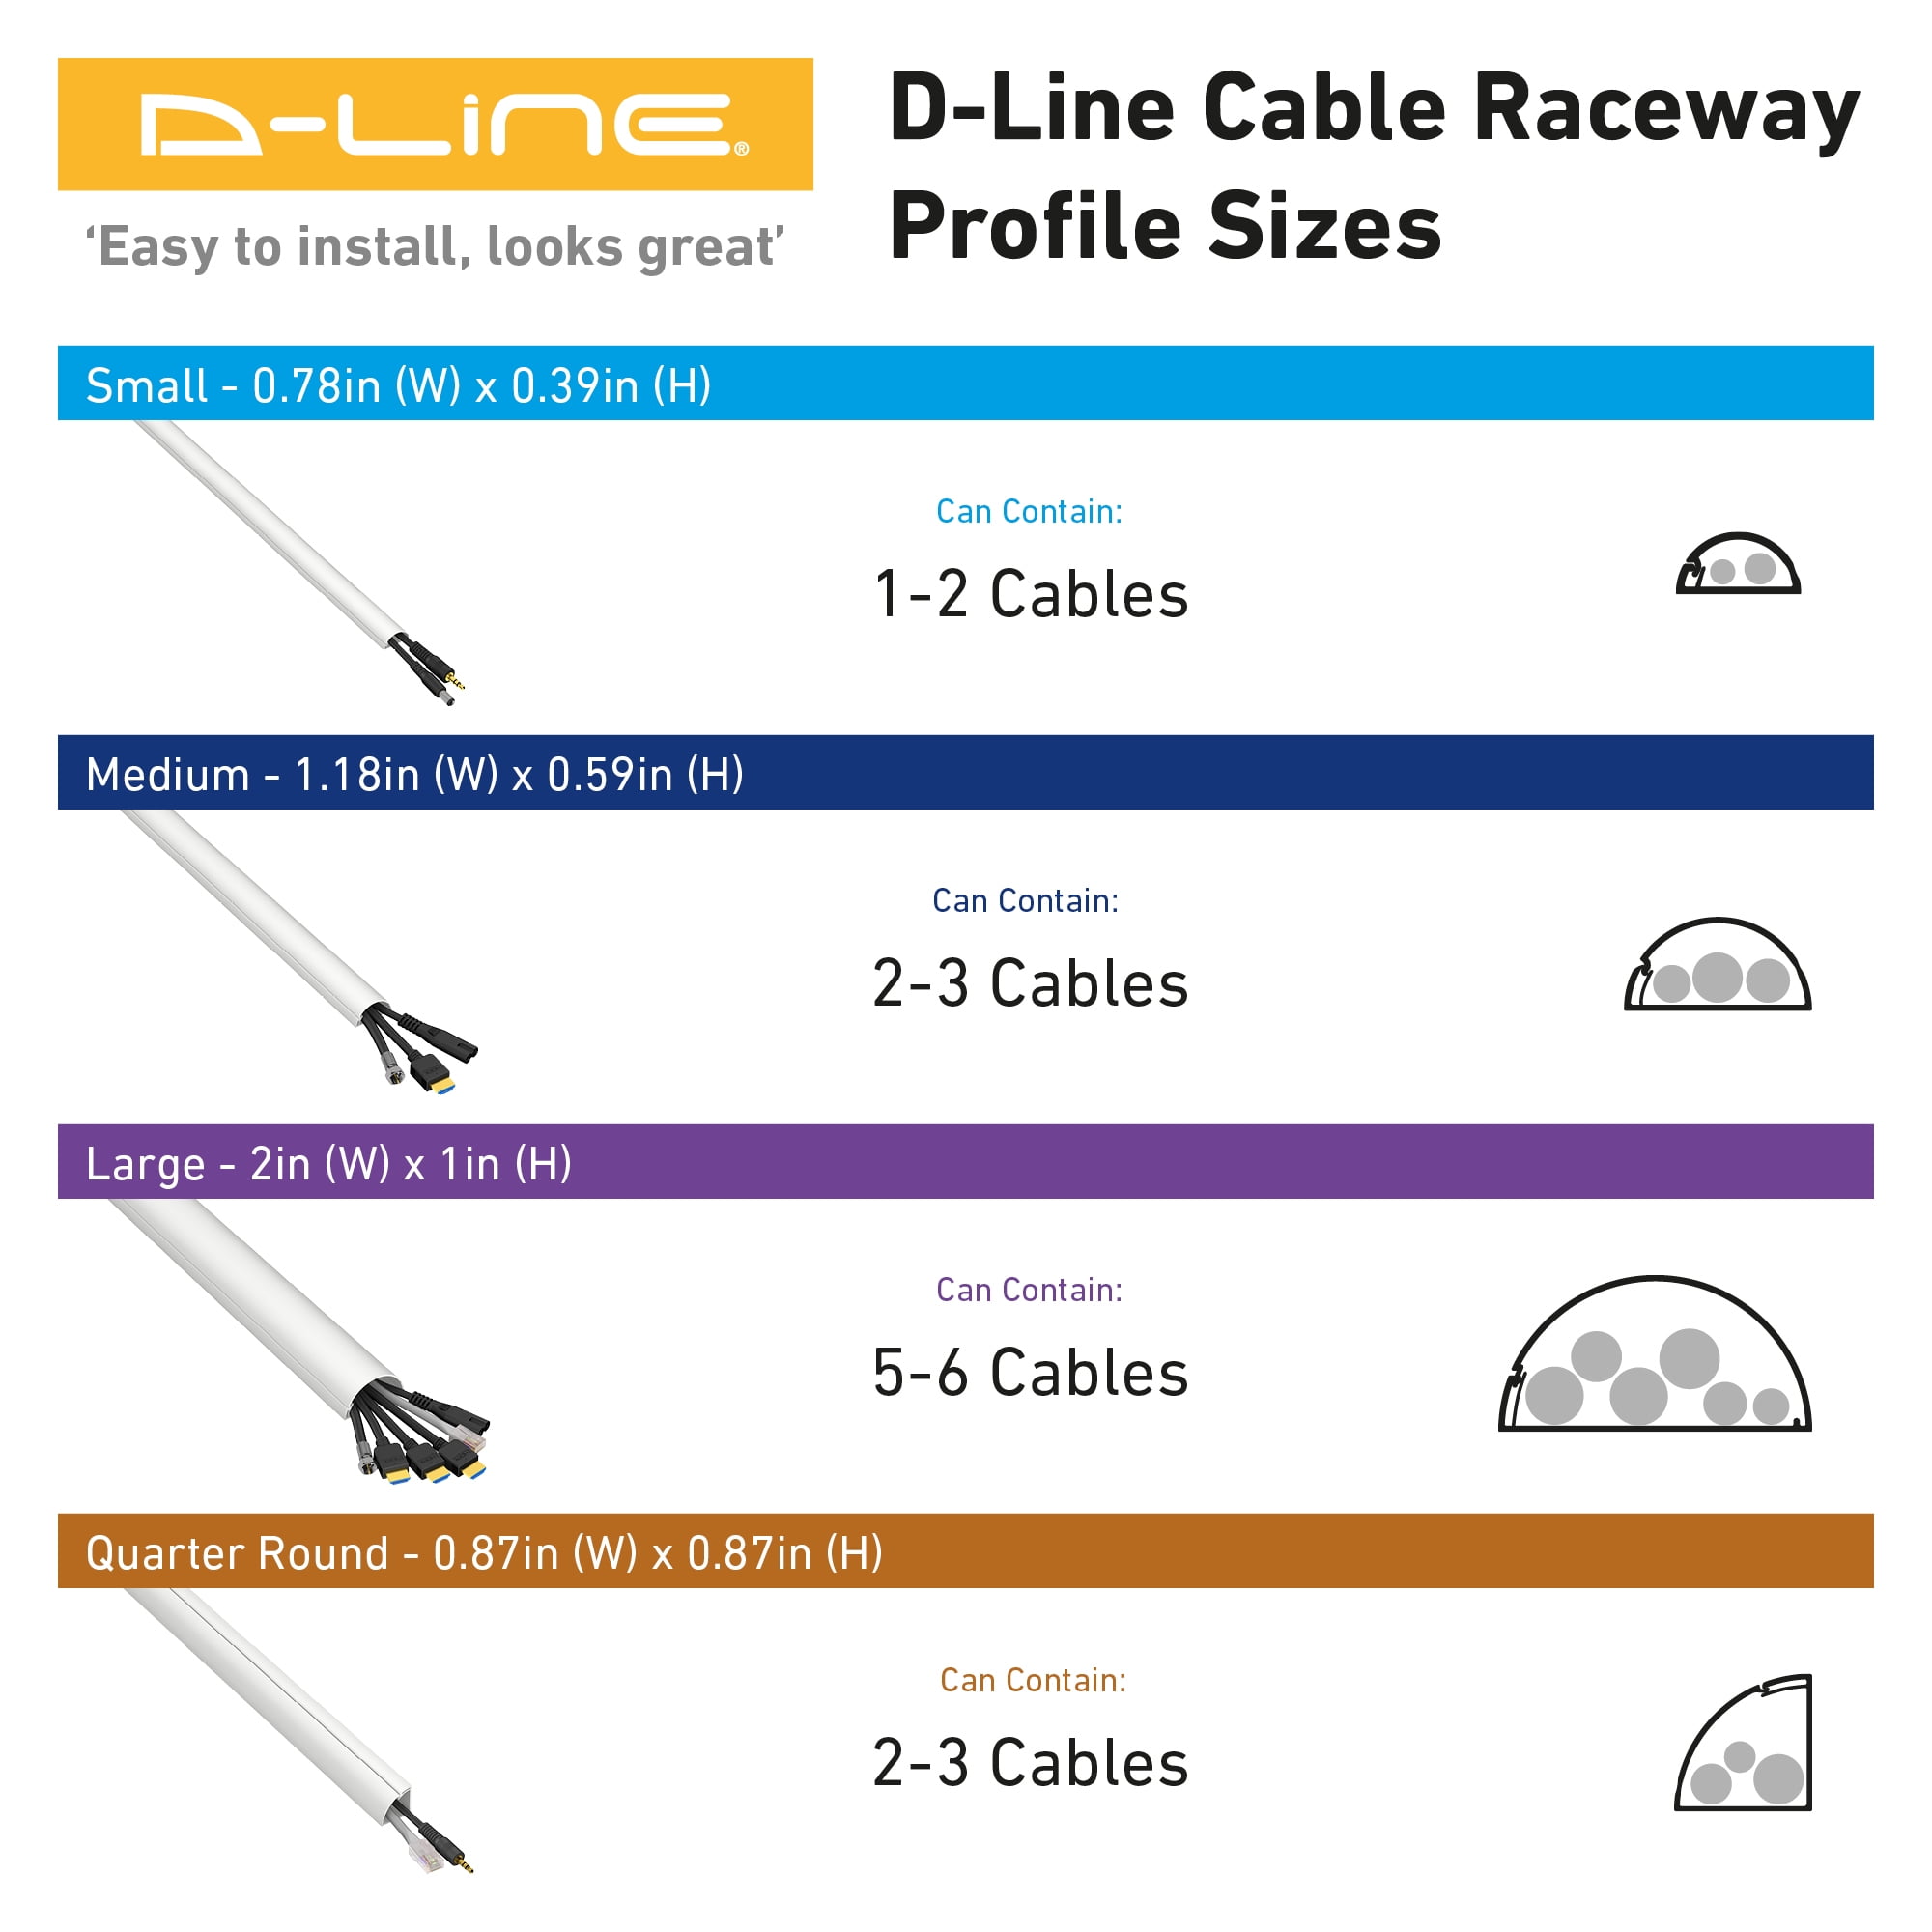 D-Line White Cable Raceway, Medium Cord Cover, White